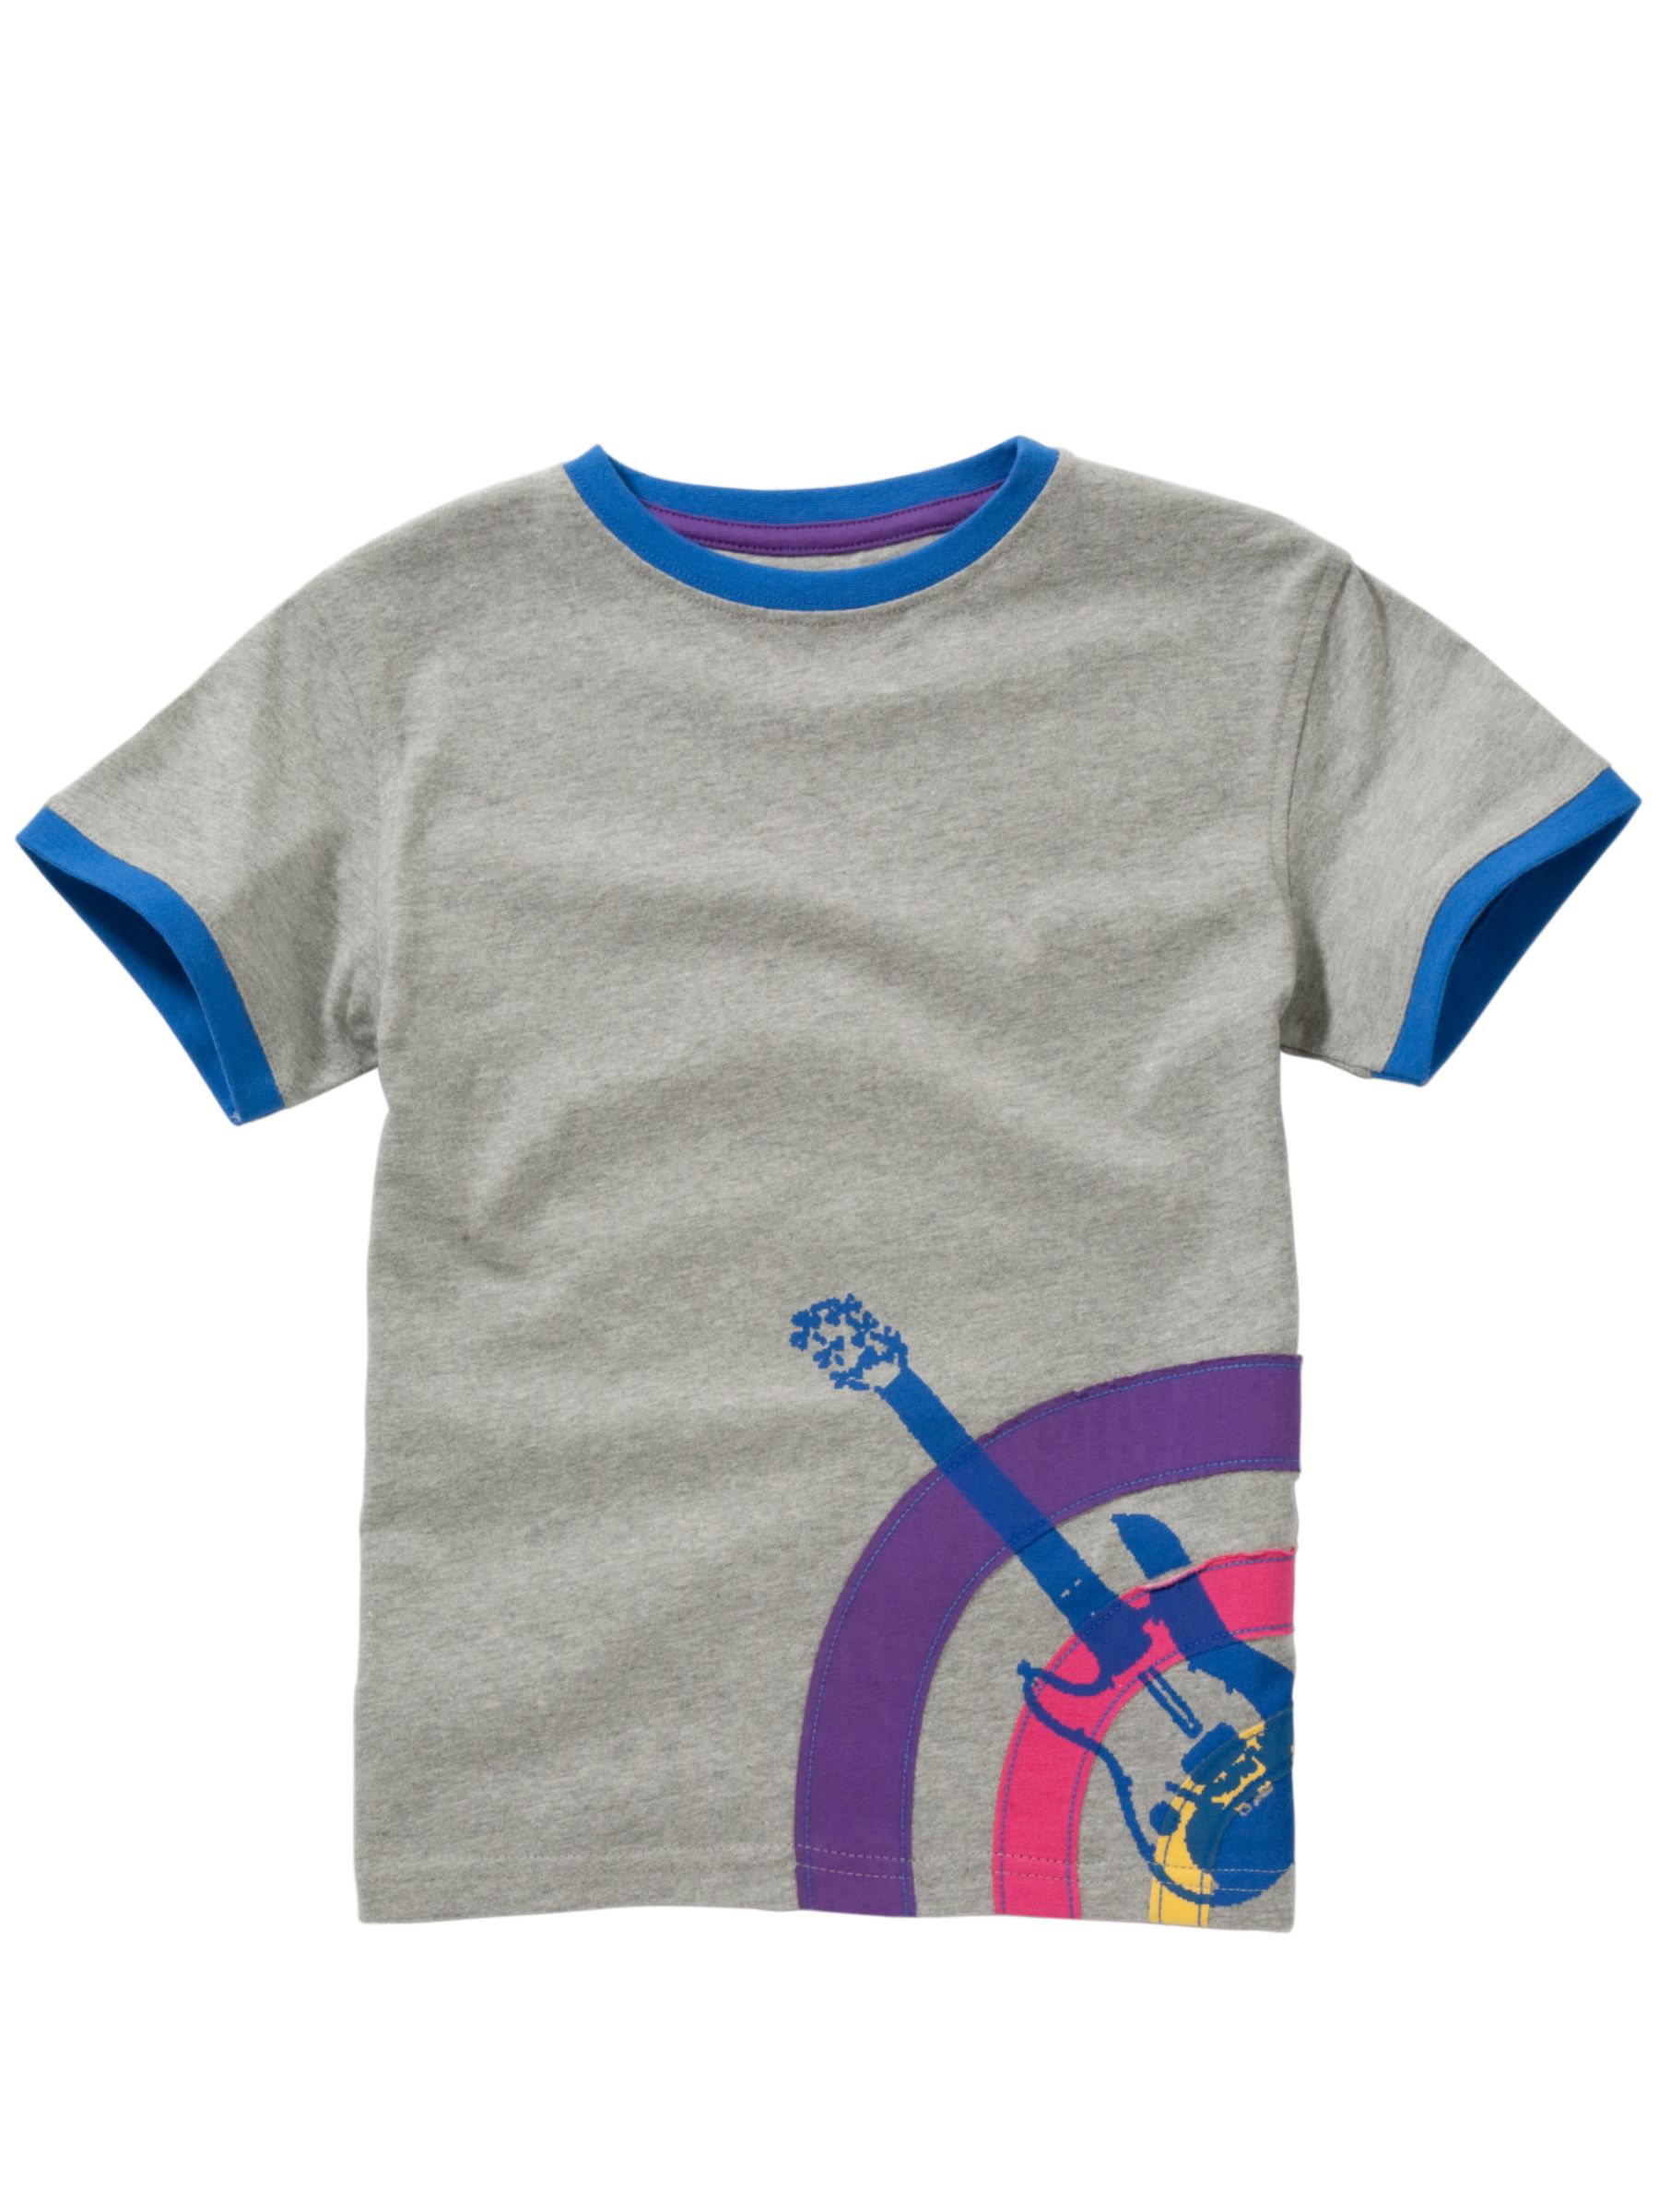 Guitar Graphic T-Shirt, Grey